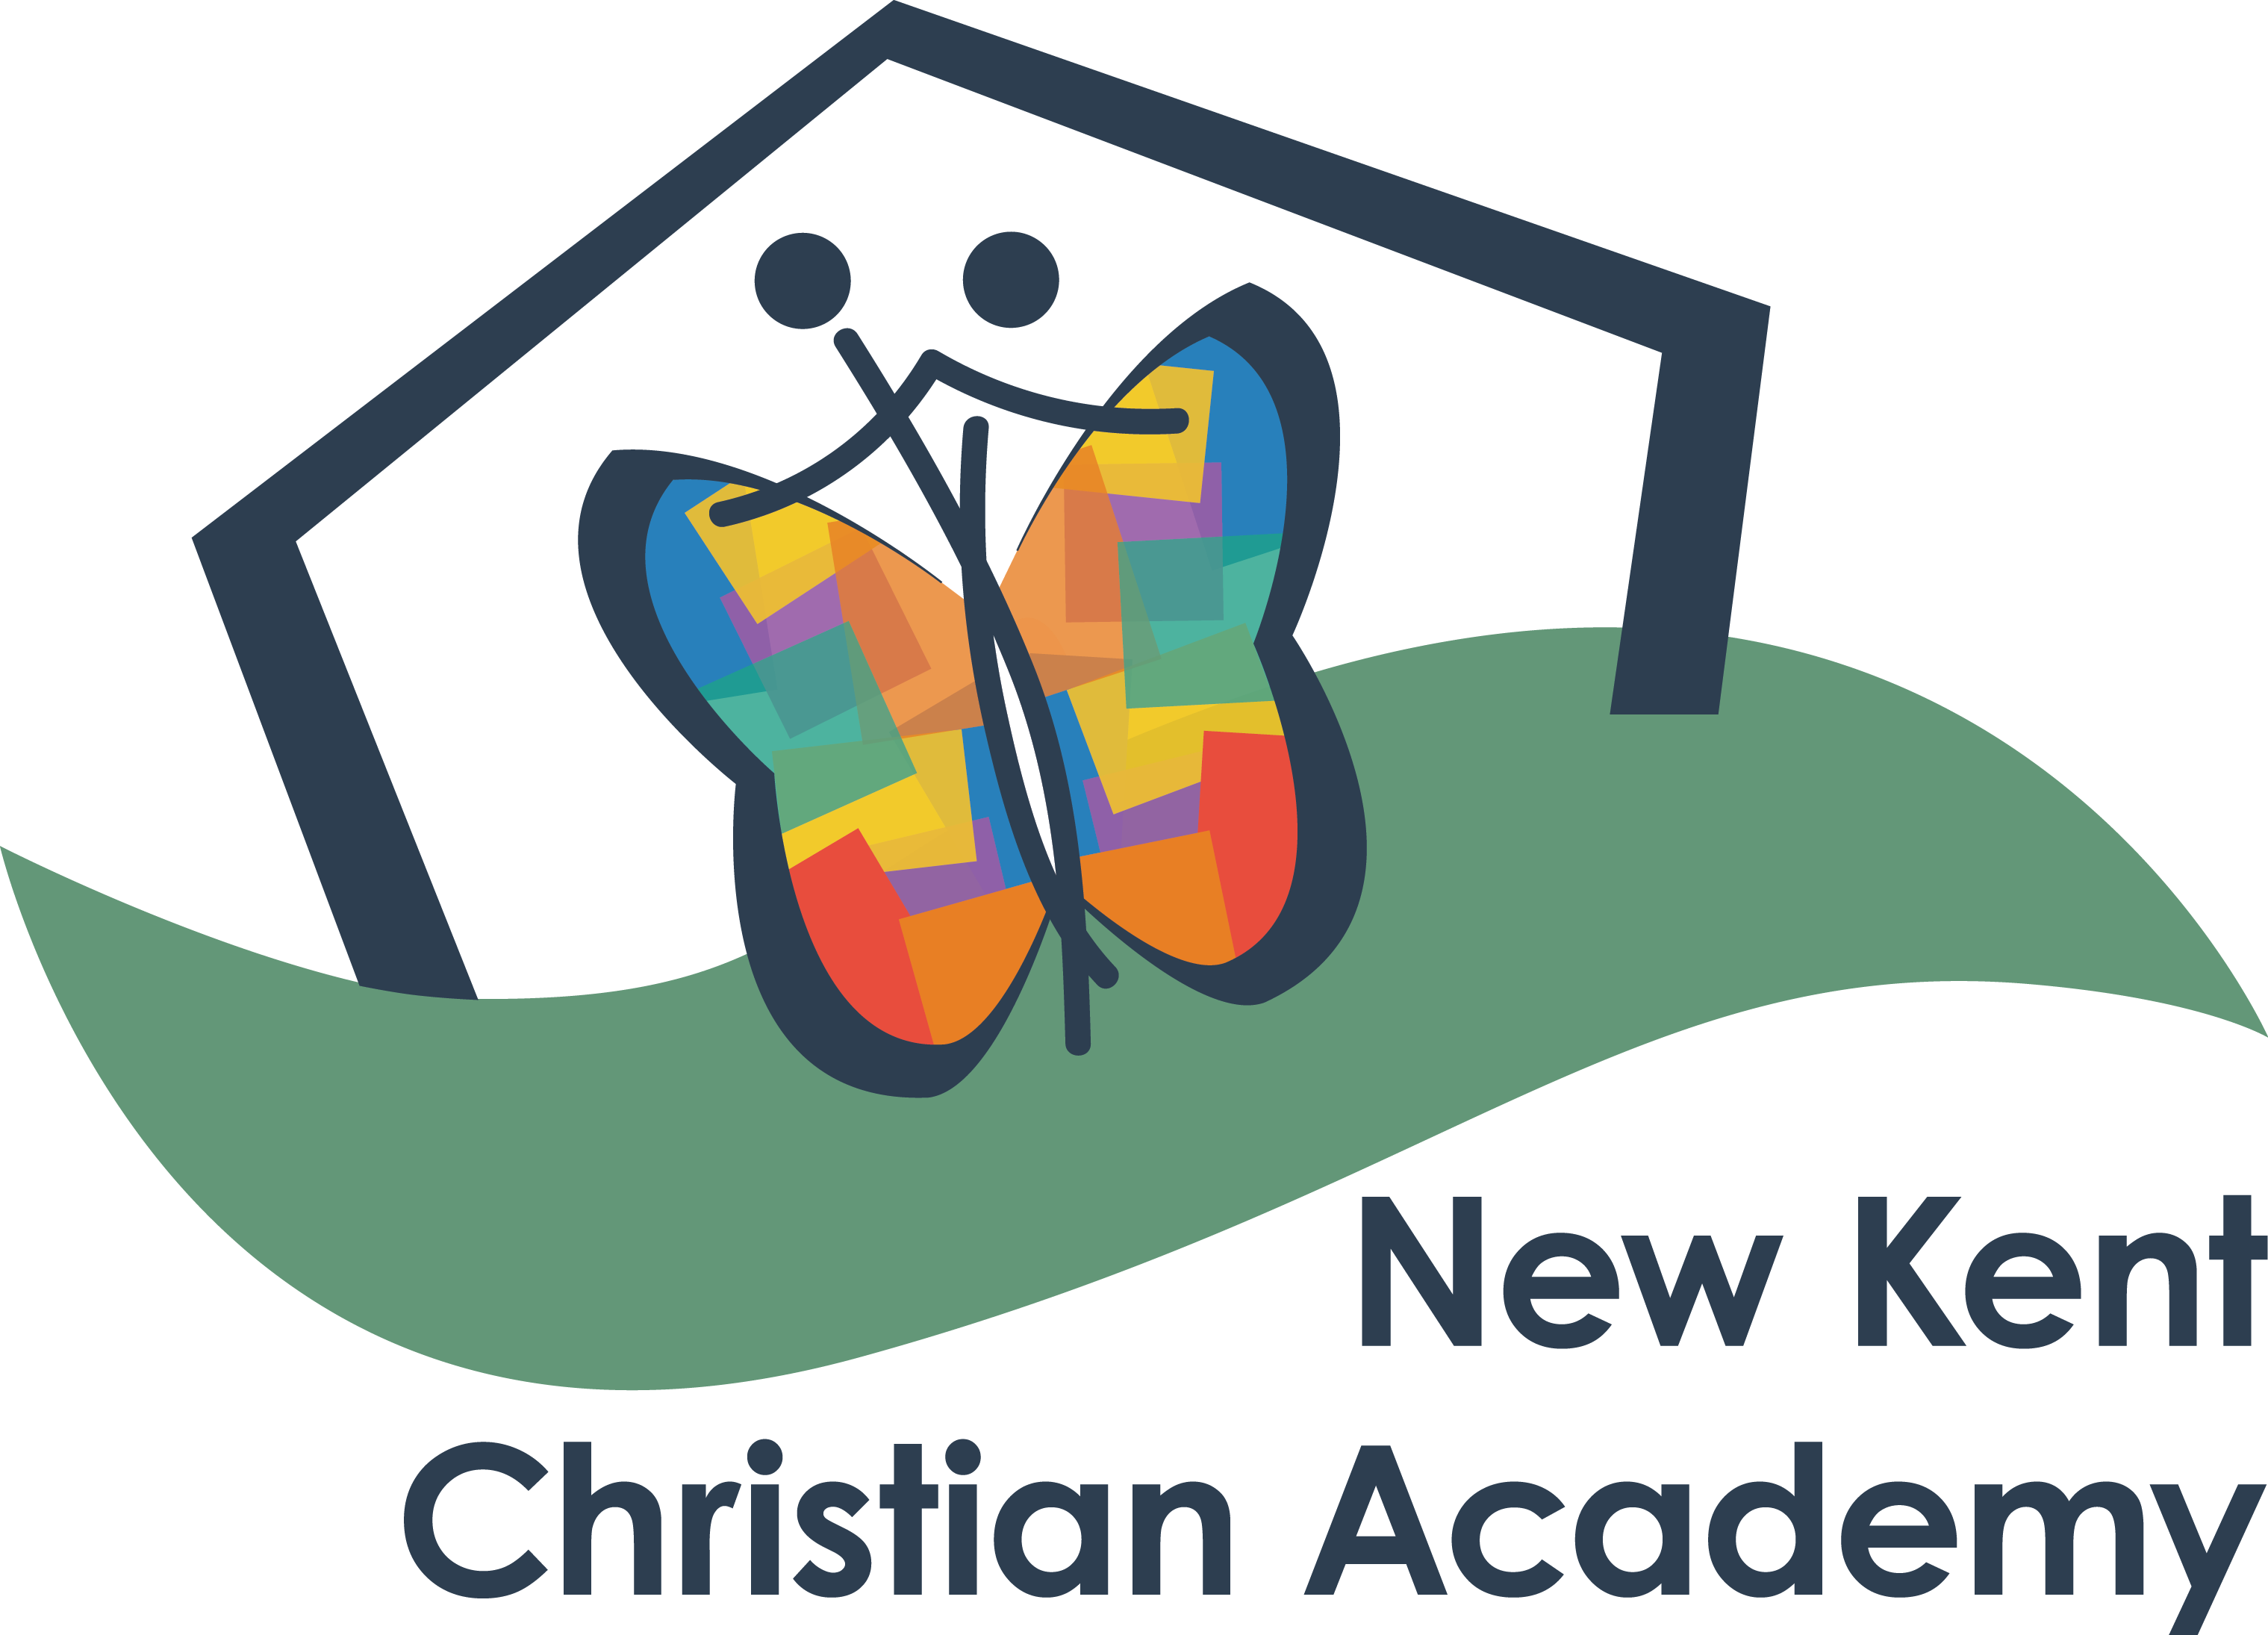 New Kent Christian Academy